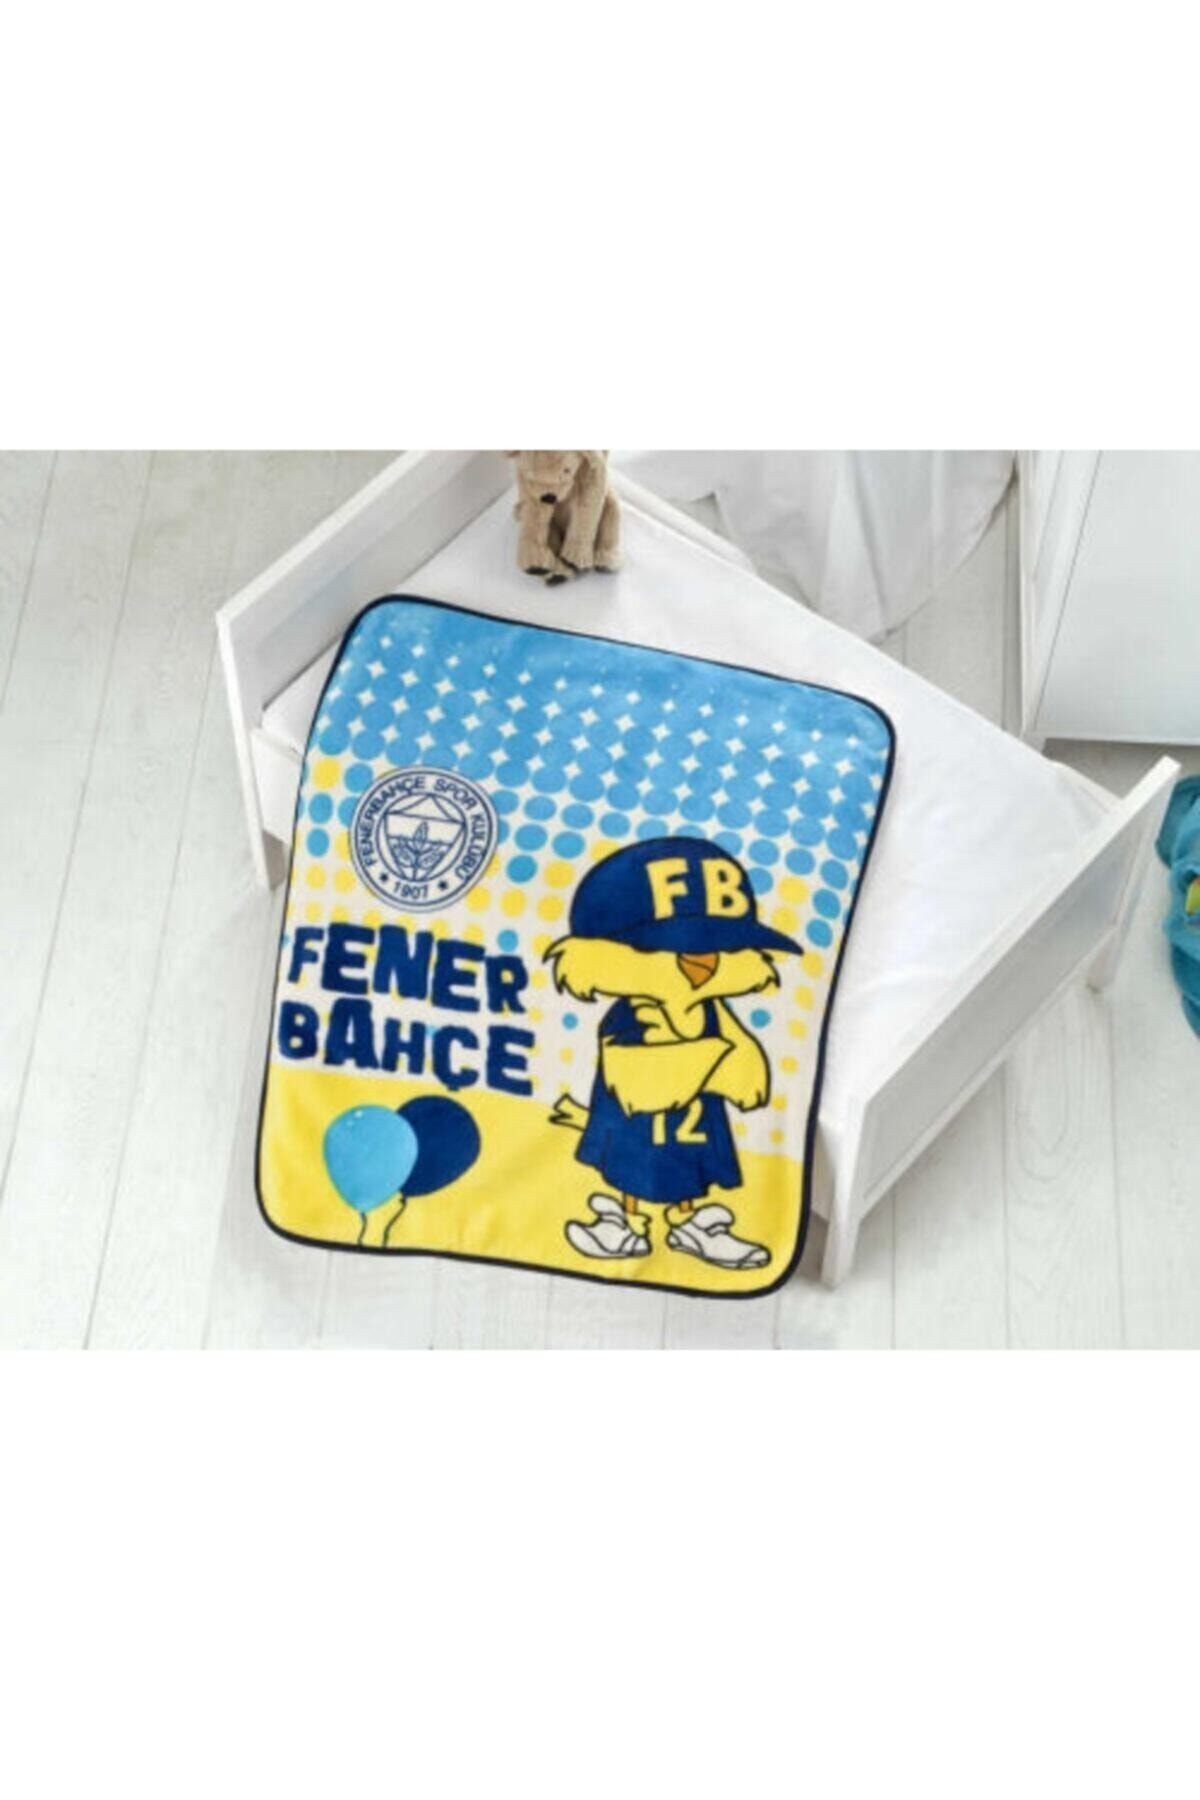 Fenerbahçe Fenerbahçe Bebek Battaniye